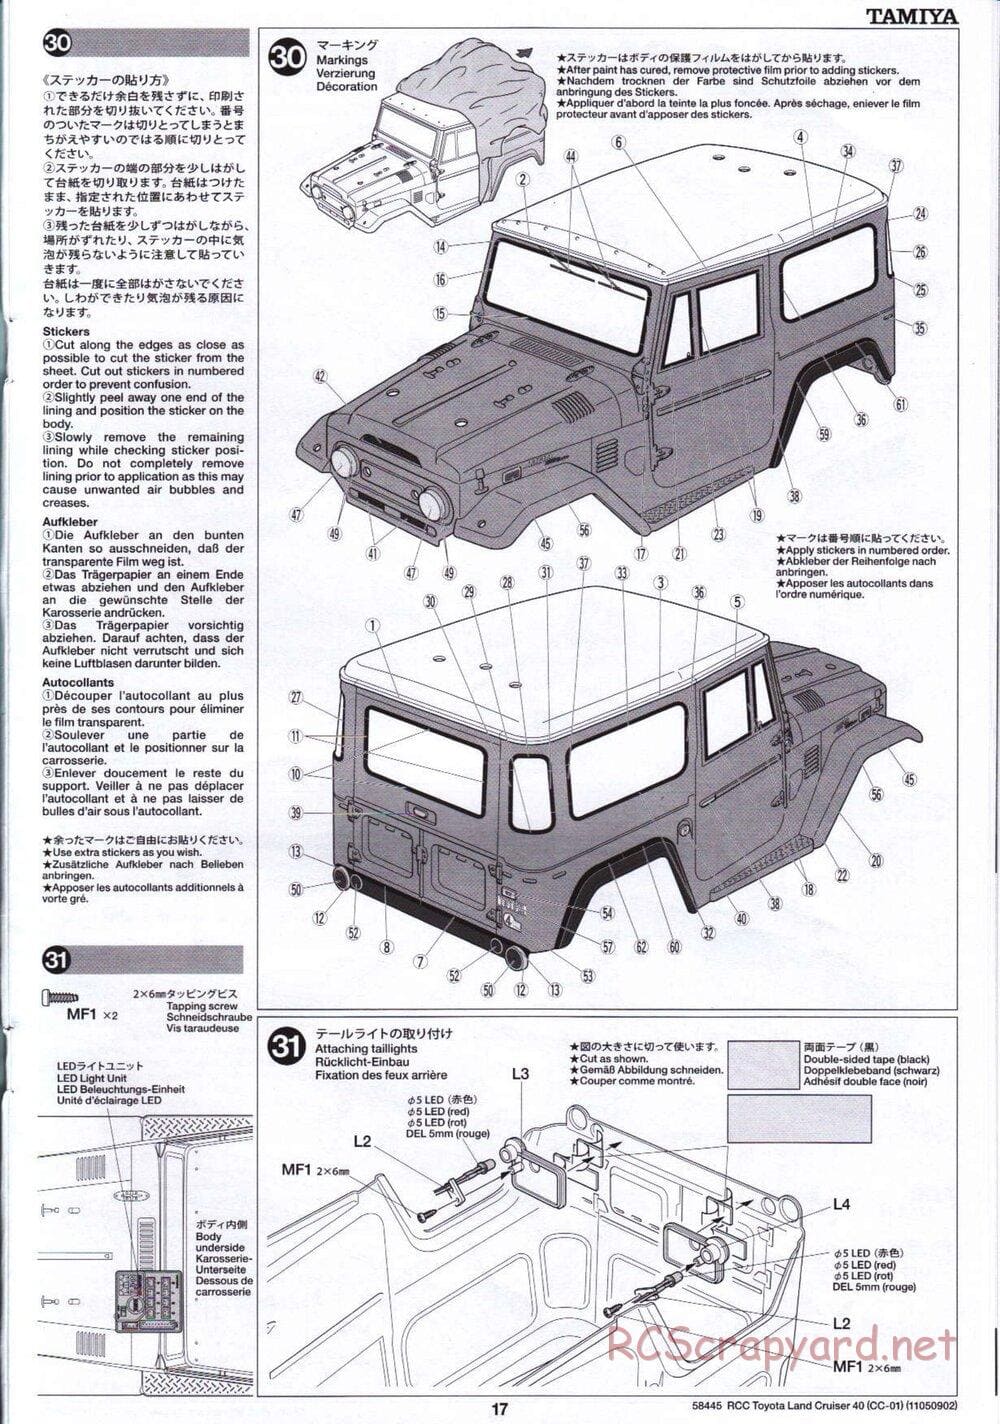 Tamiya - Toyota Land Cruiser 40 - CC-01 Chassis - Manual - Page 17